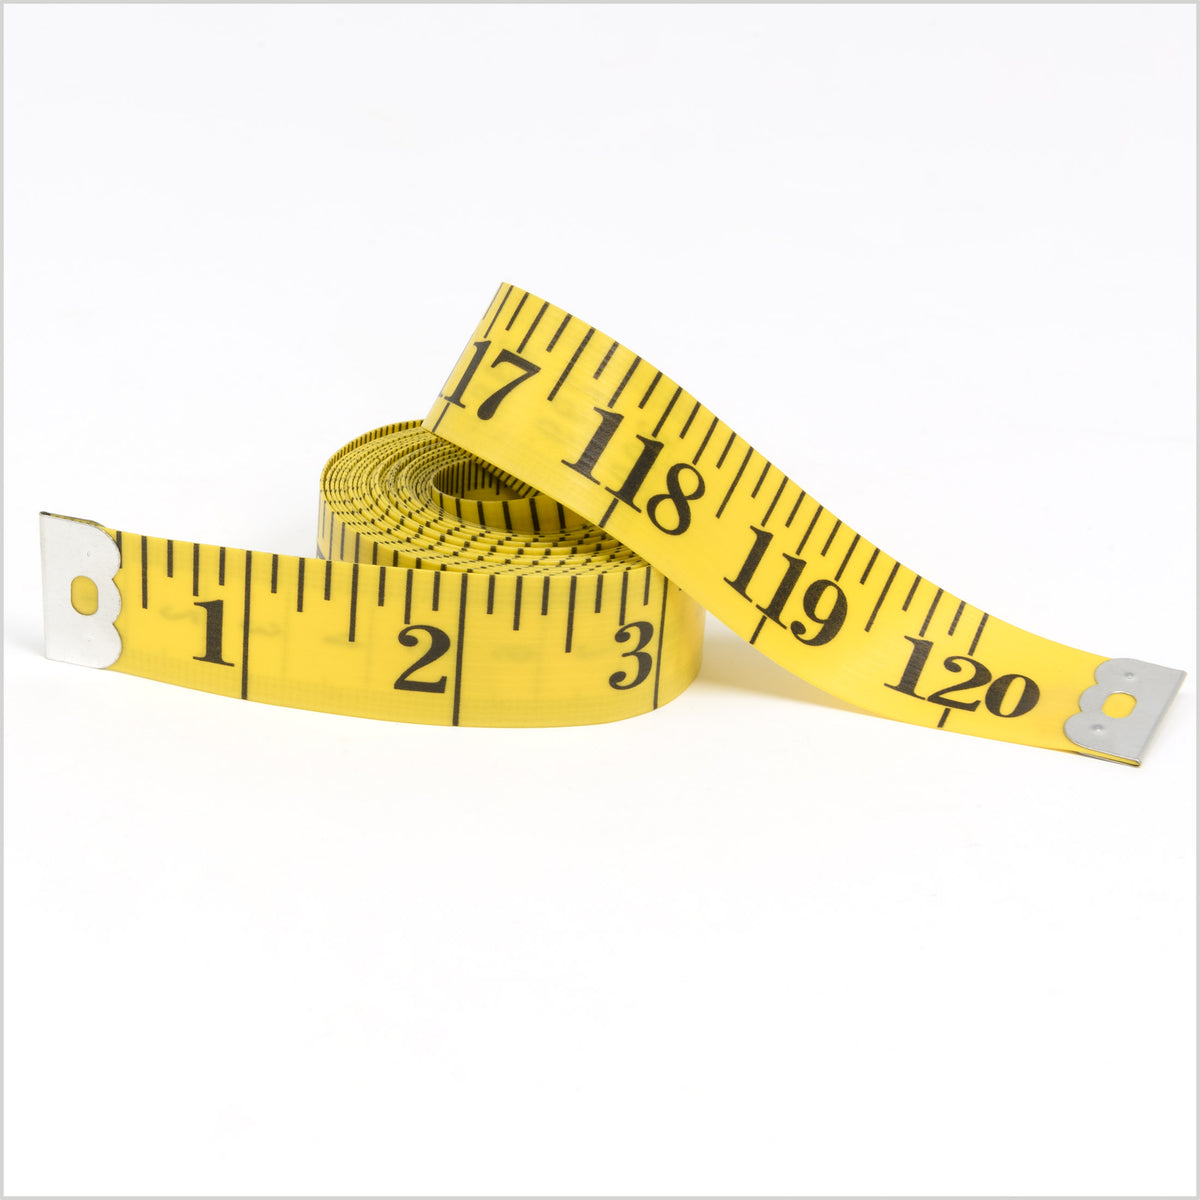 Prym Dritz Tape Measure - Measuring Tape